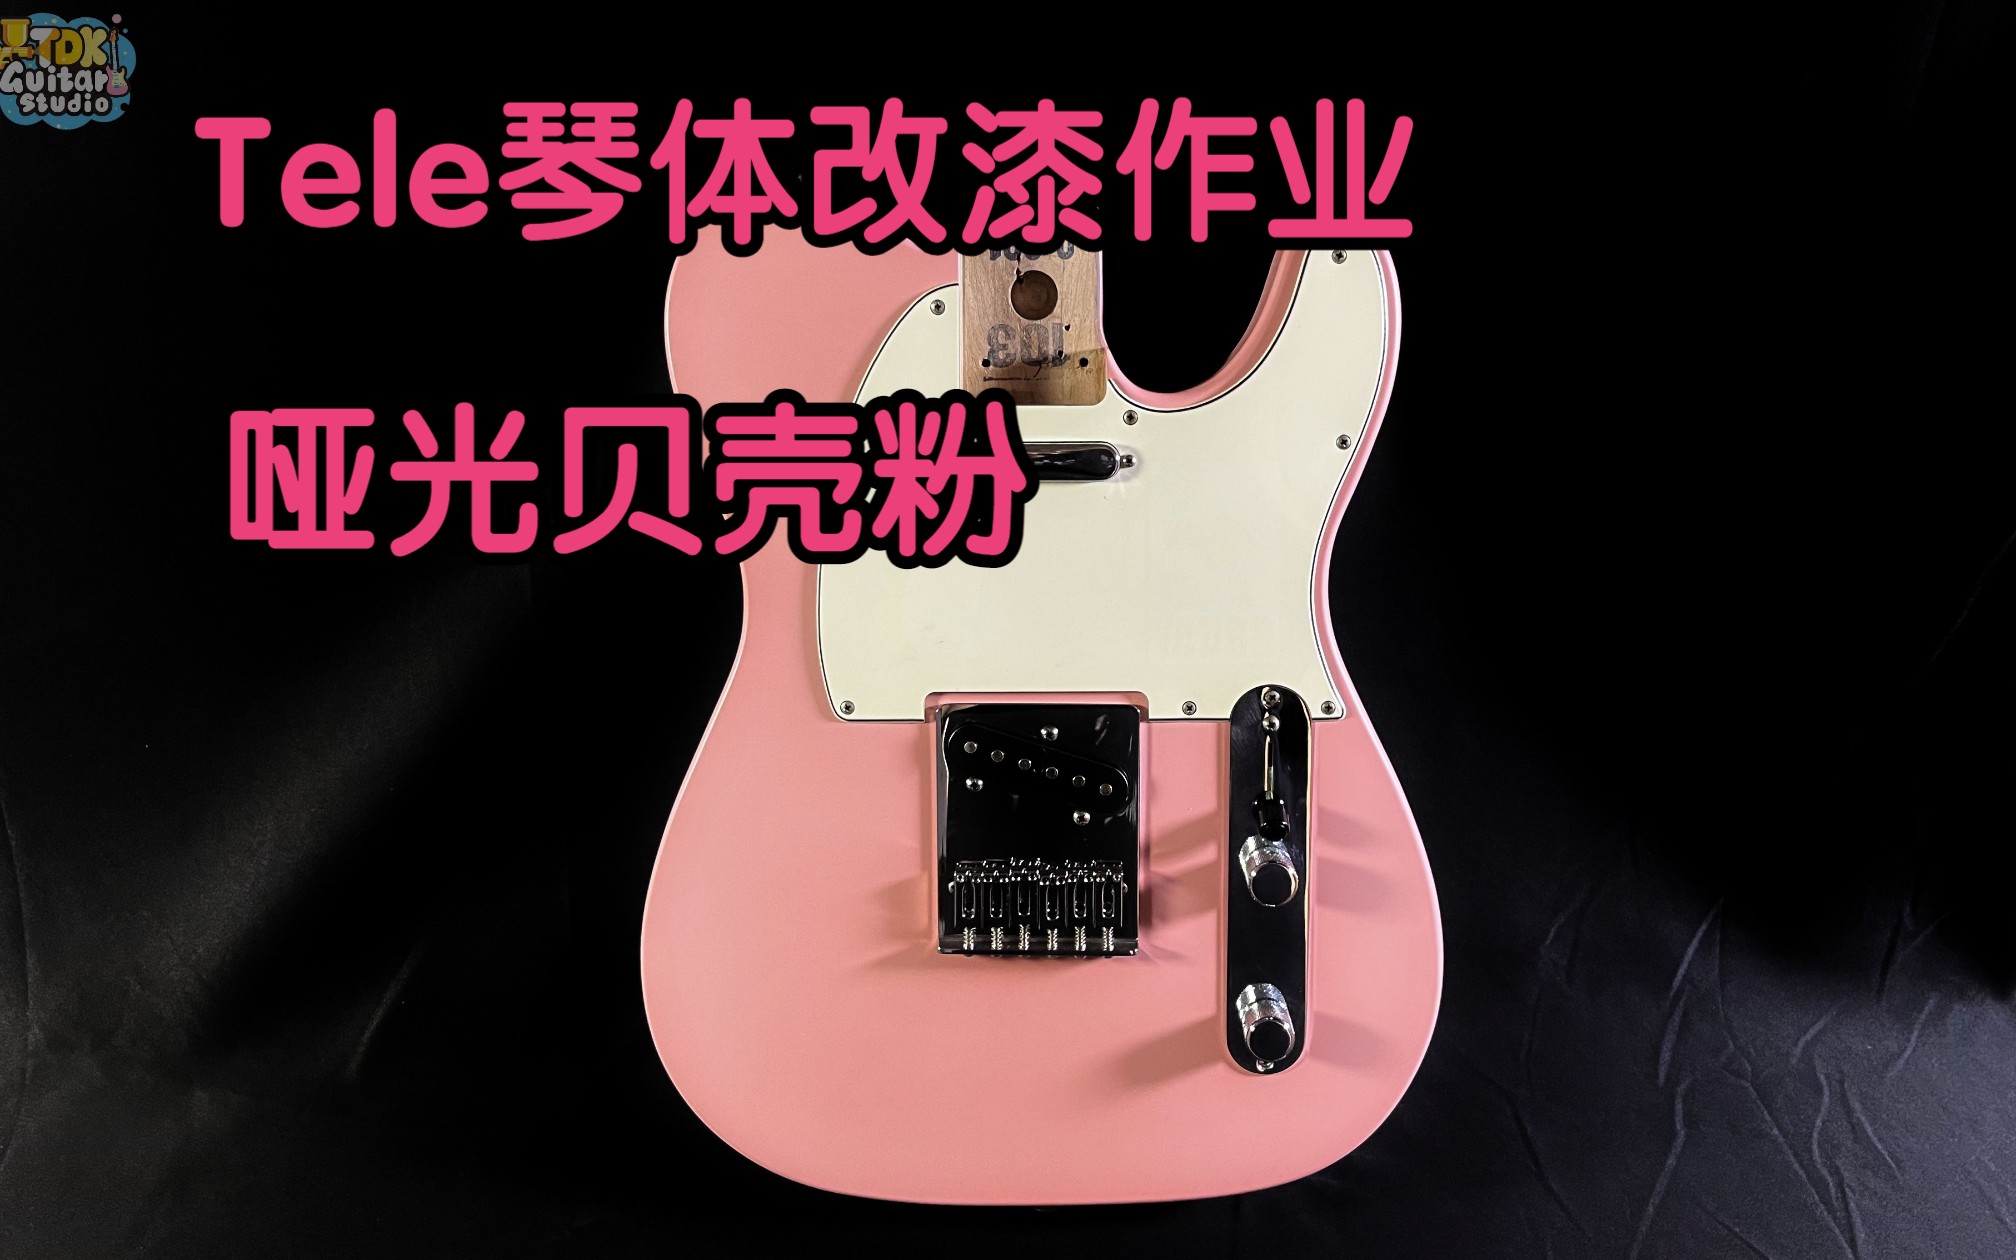 Tele琴体改漆【TDK吉他】是恋爱的感觉！哑光贝壳粉色！